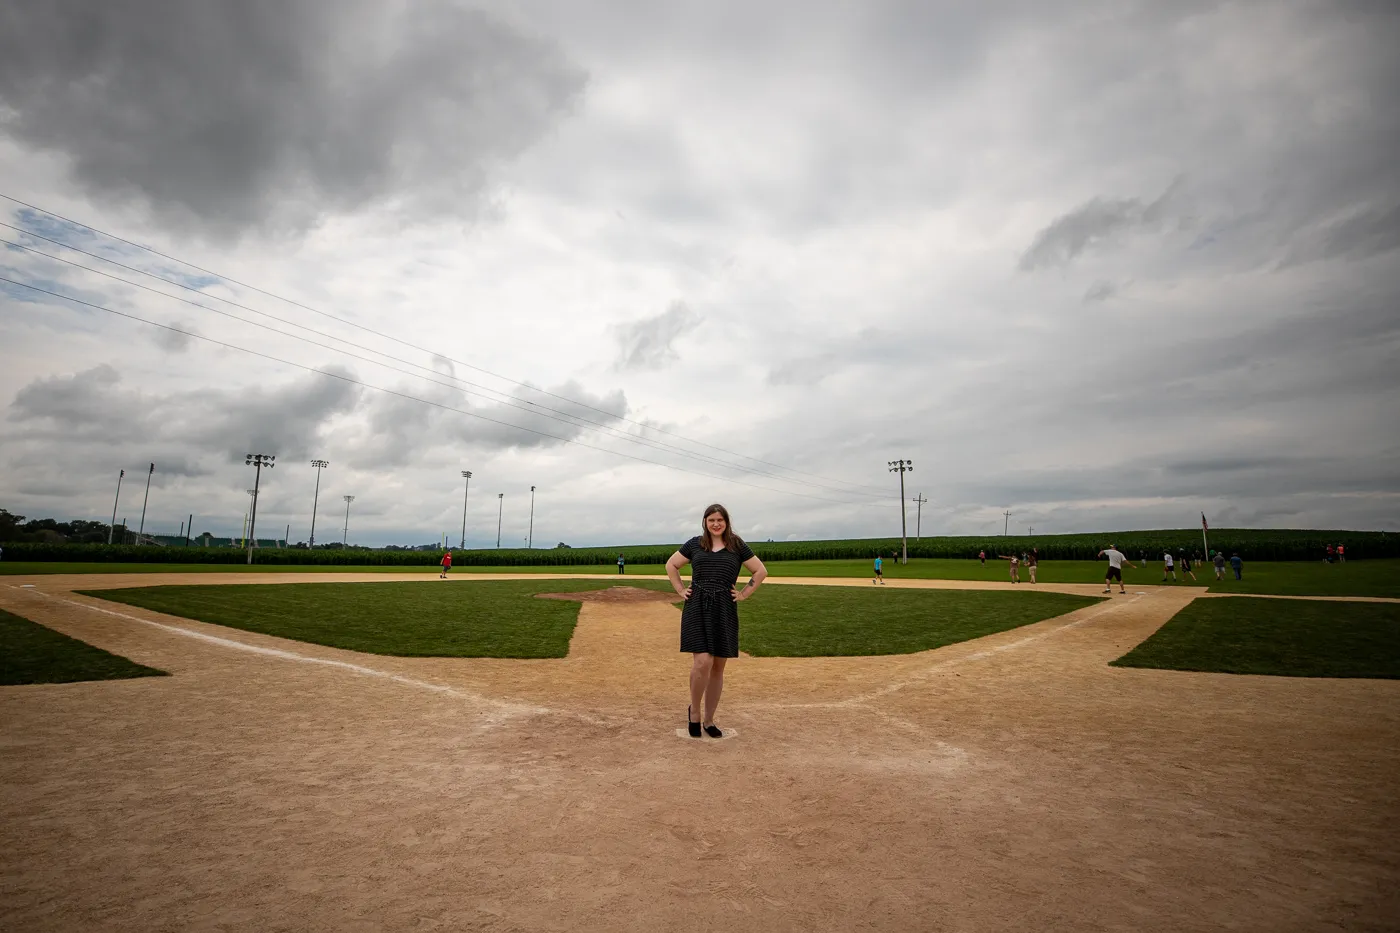 Baseball diamond at the Field of Dreams Movie Site in Dyersville, Iowa